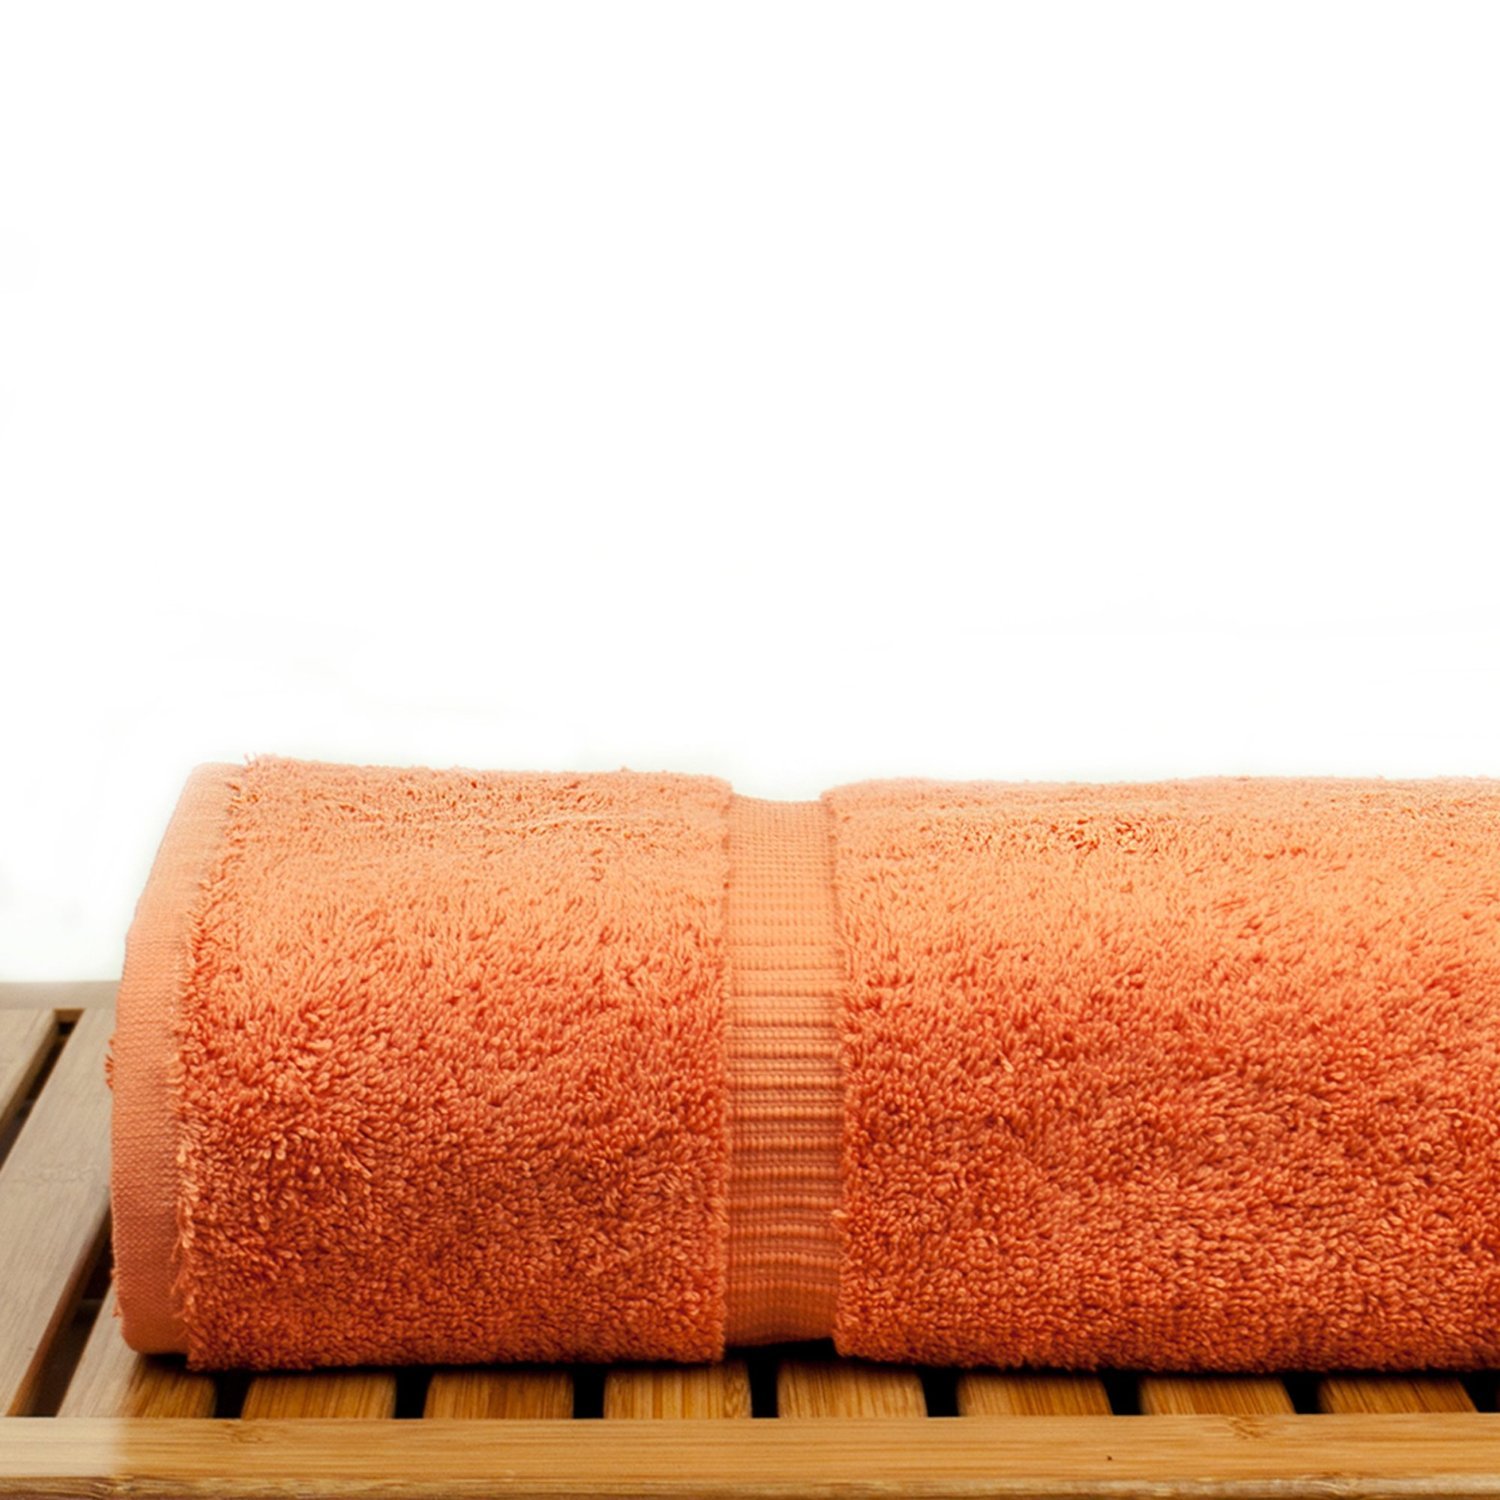 27" x 54" - 17 lbs/doz - %100 Turkish Cotton Coral Bath Towel - Dobby Border-Robemart.com